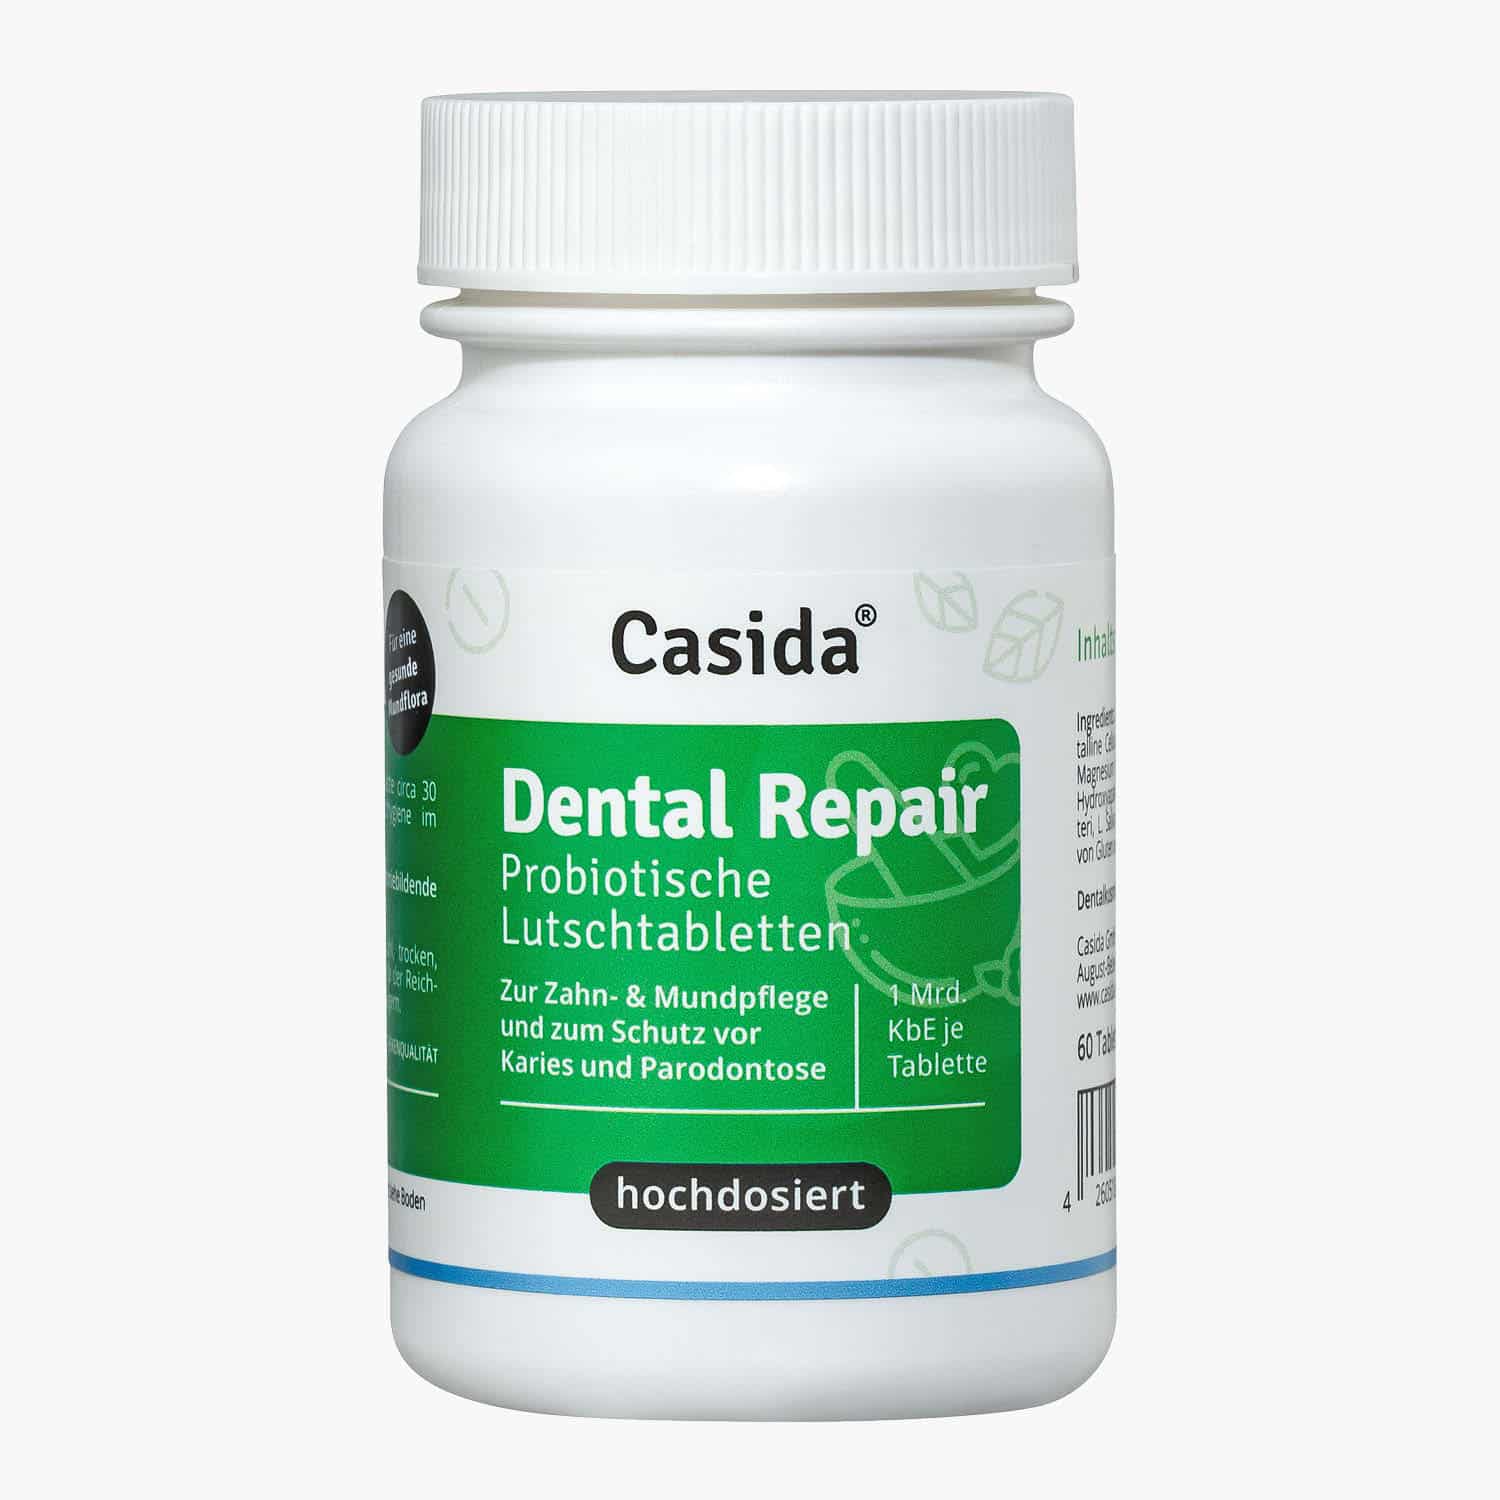 Casida-Dental-Repair-Lutschtabletten-%E2%80%93-60-Stk.-14401553-PZN-Apotheke-Karies-Zahnpflege-Parodontose.jpg